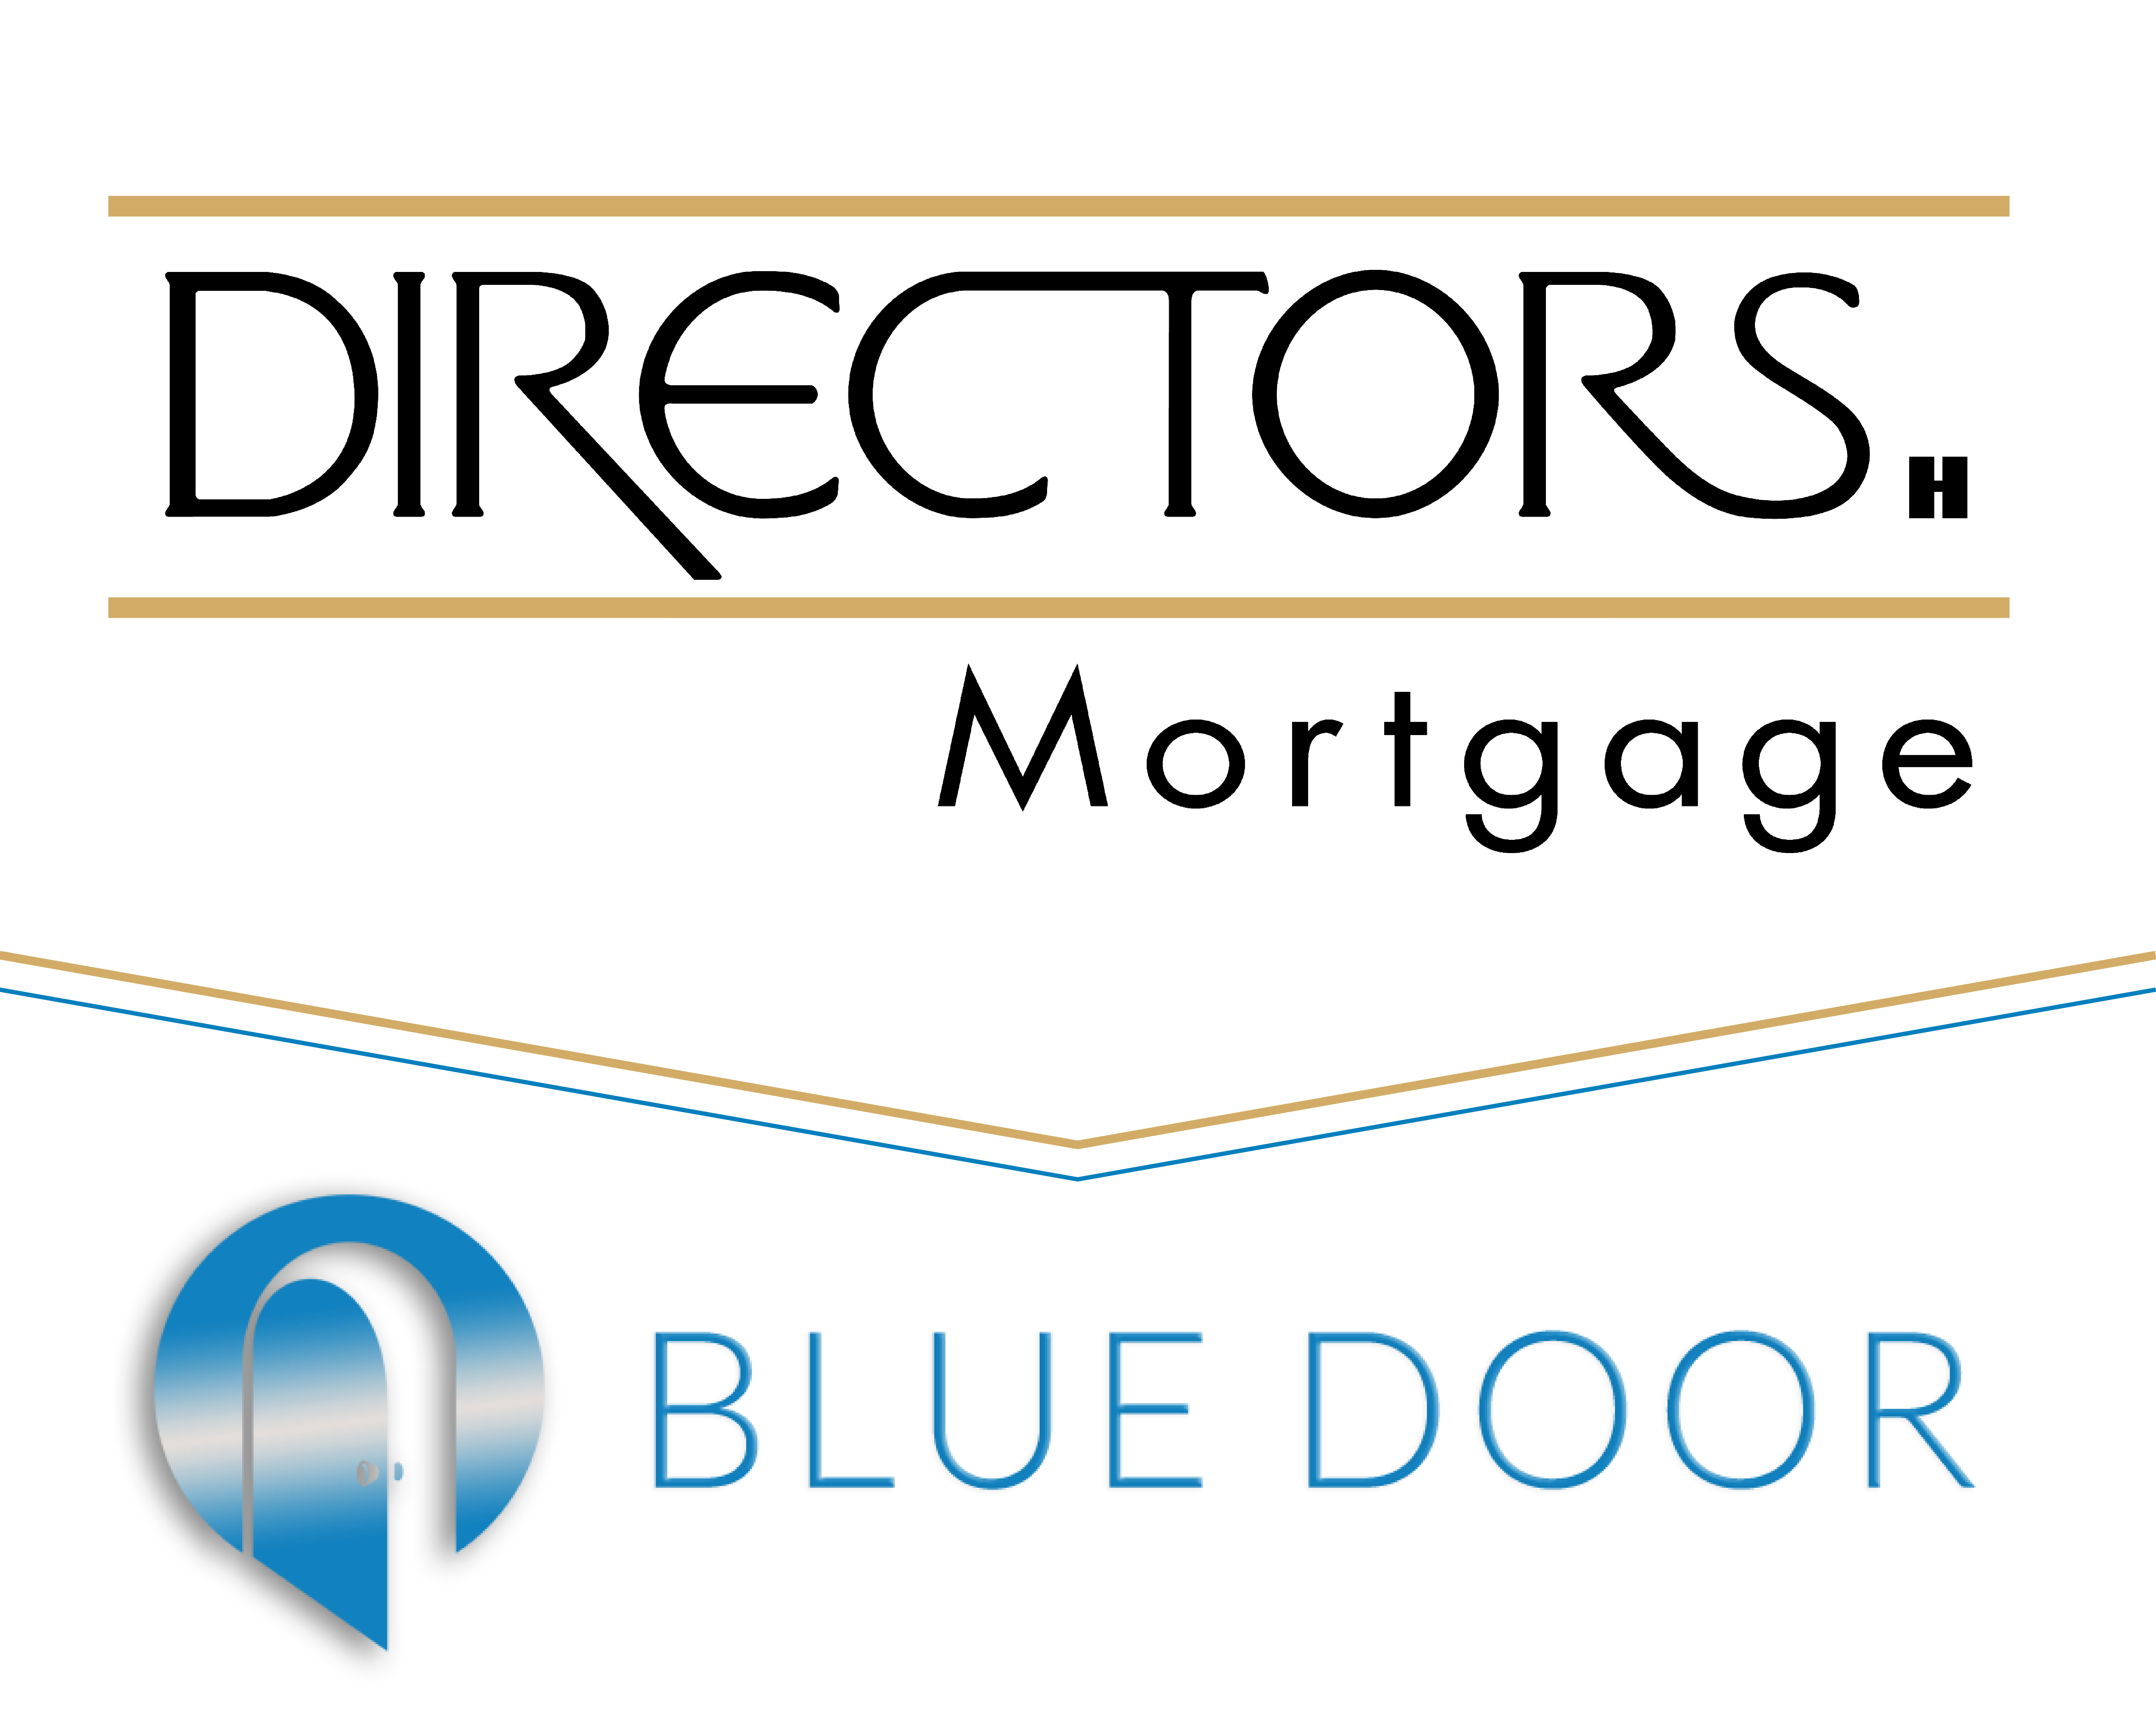 Directors Mortgage logo